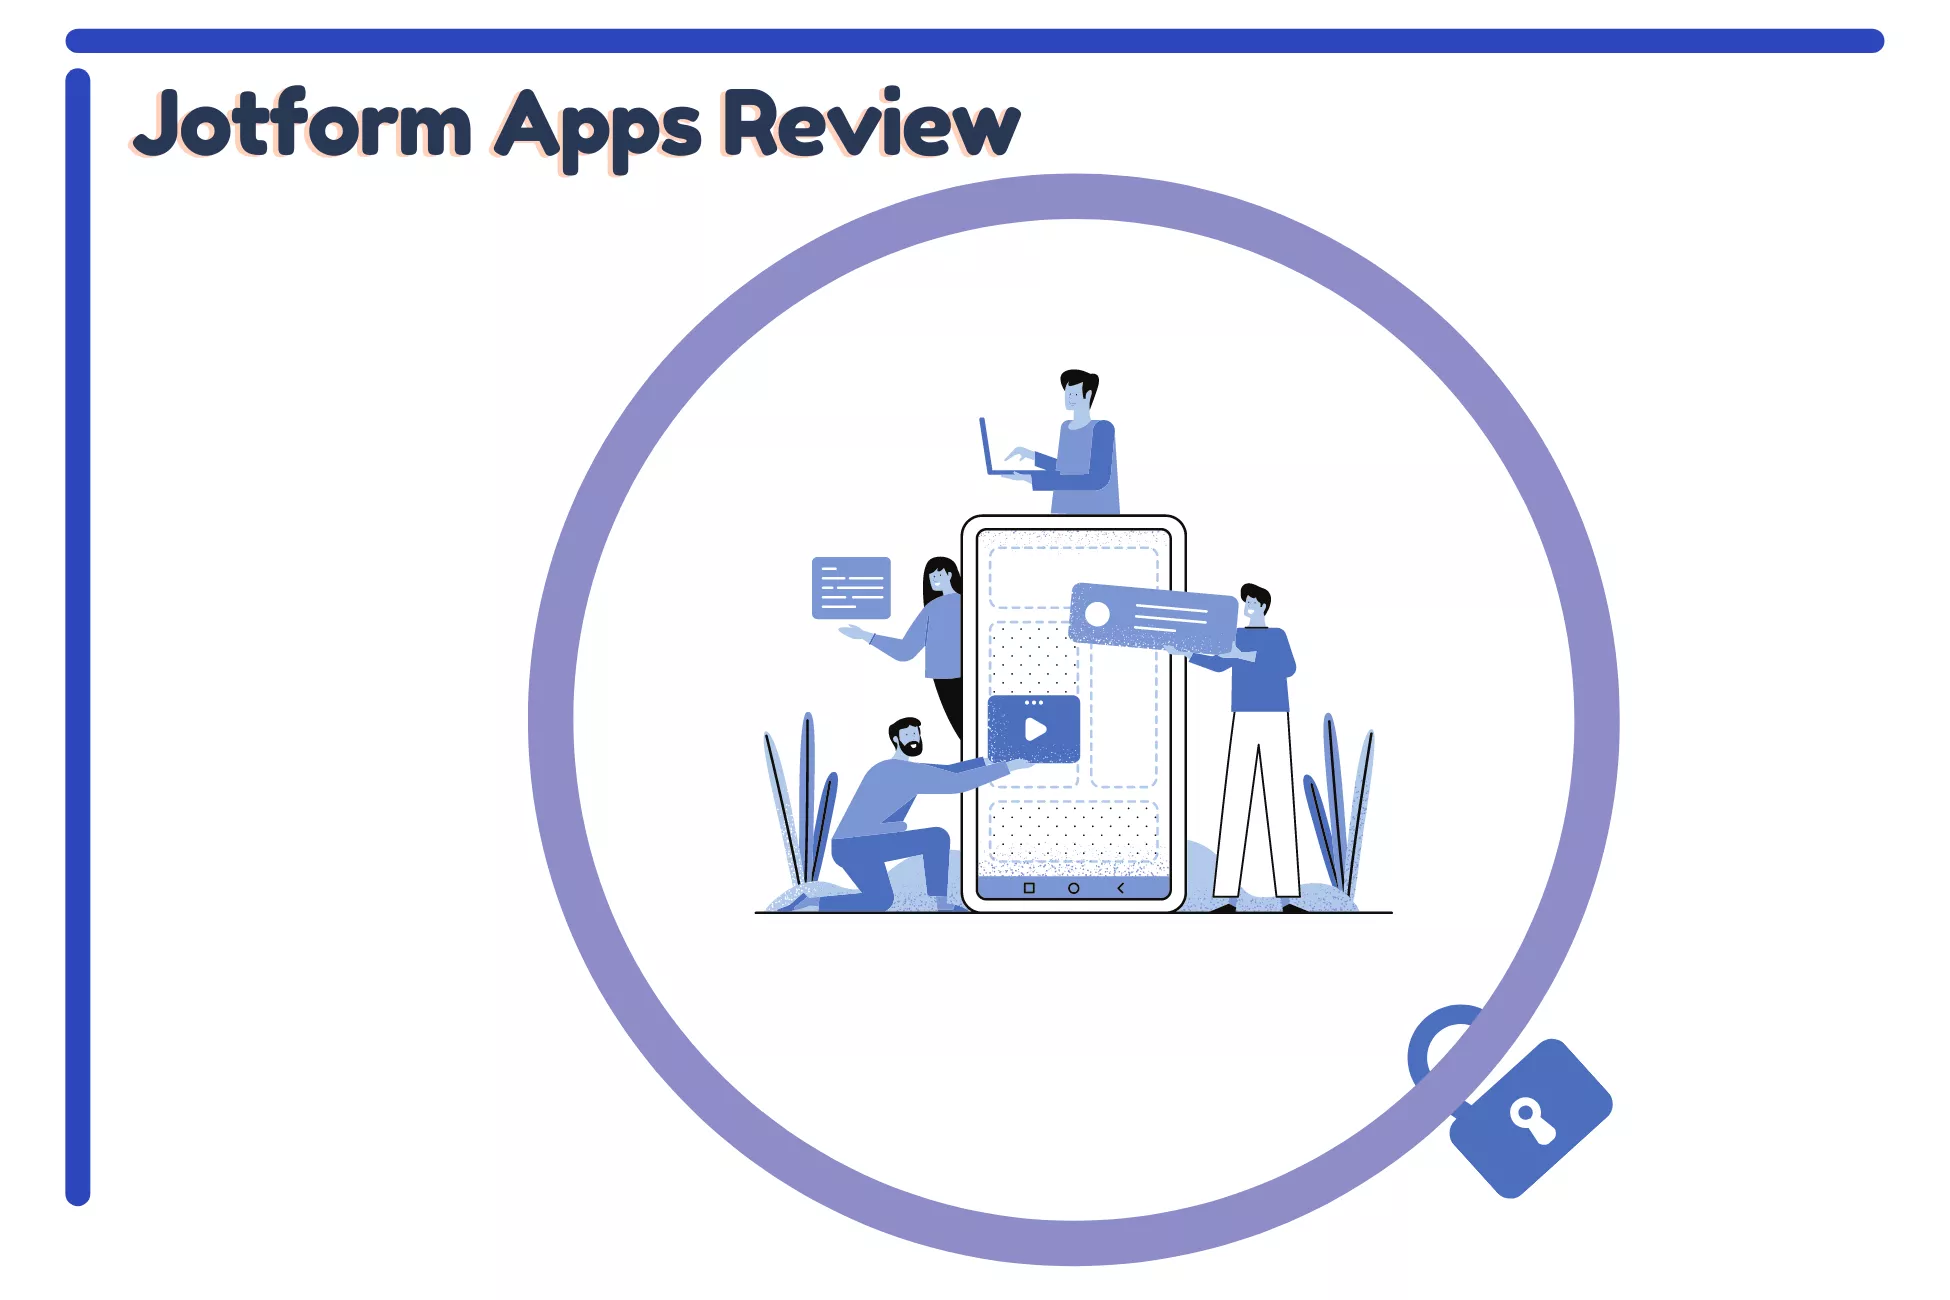 Jotform Apps Review